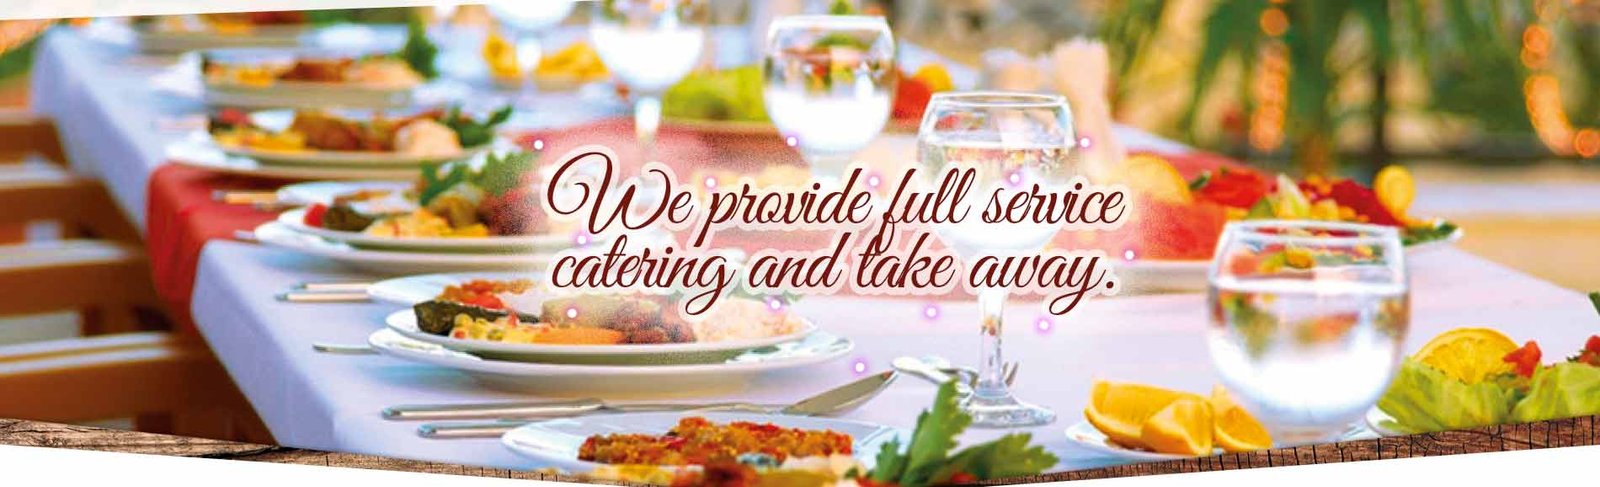 Catering menus for weddings in Hickman, NE Firth, NE